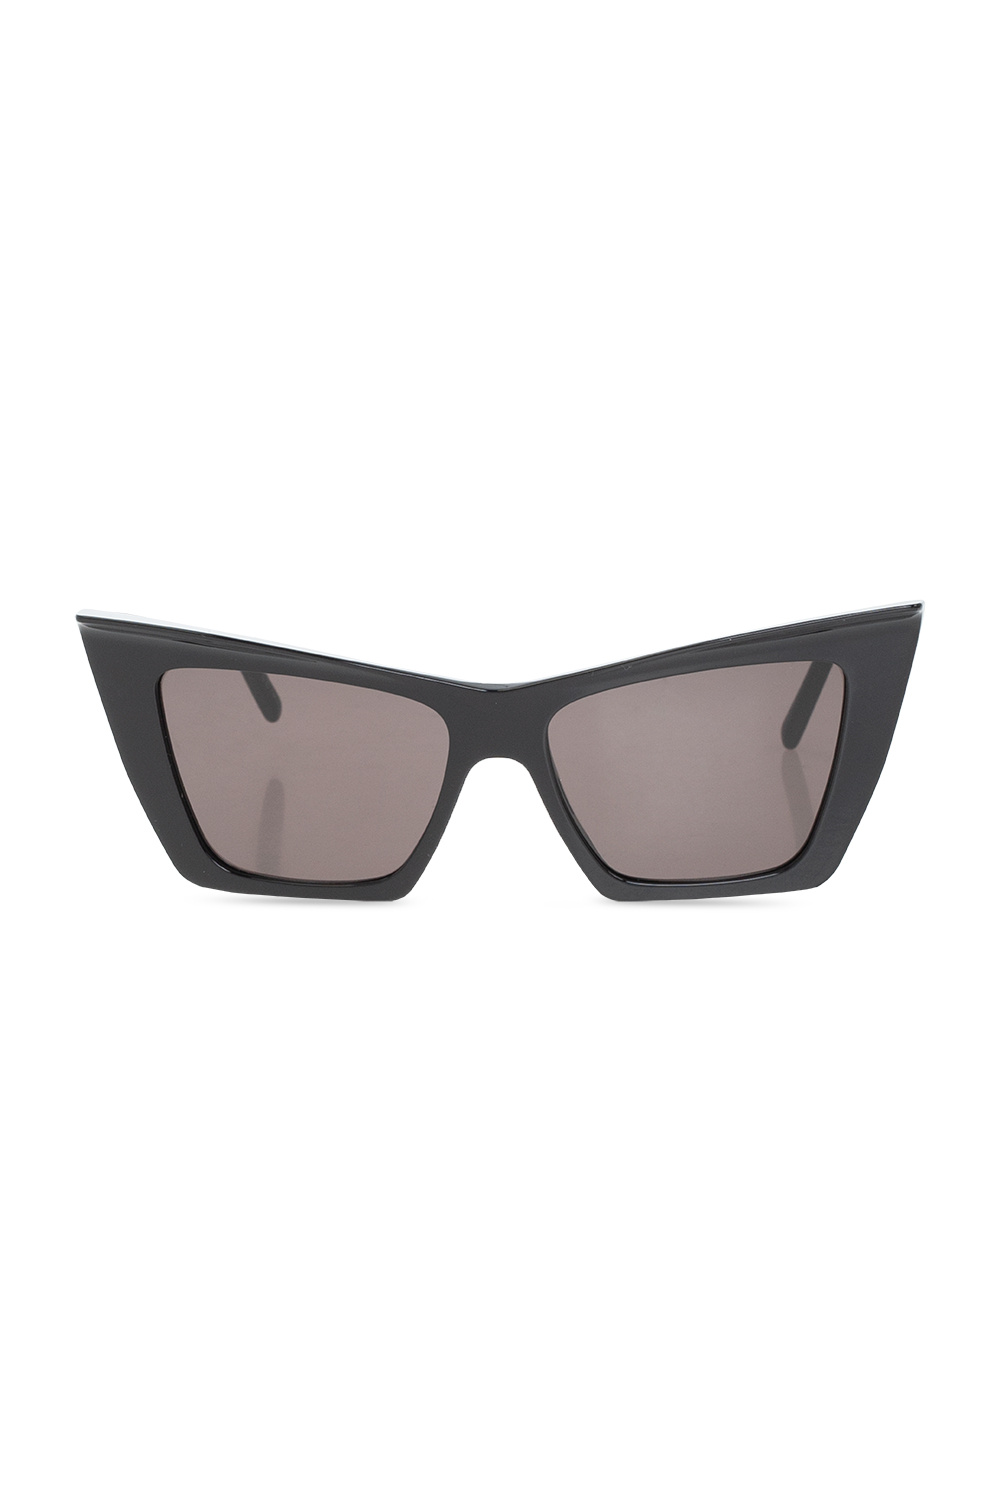 Saint Laurent ‘SL 372’ sunglasses